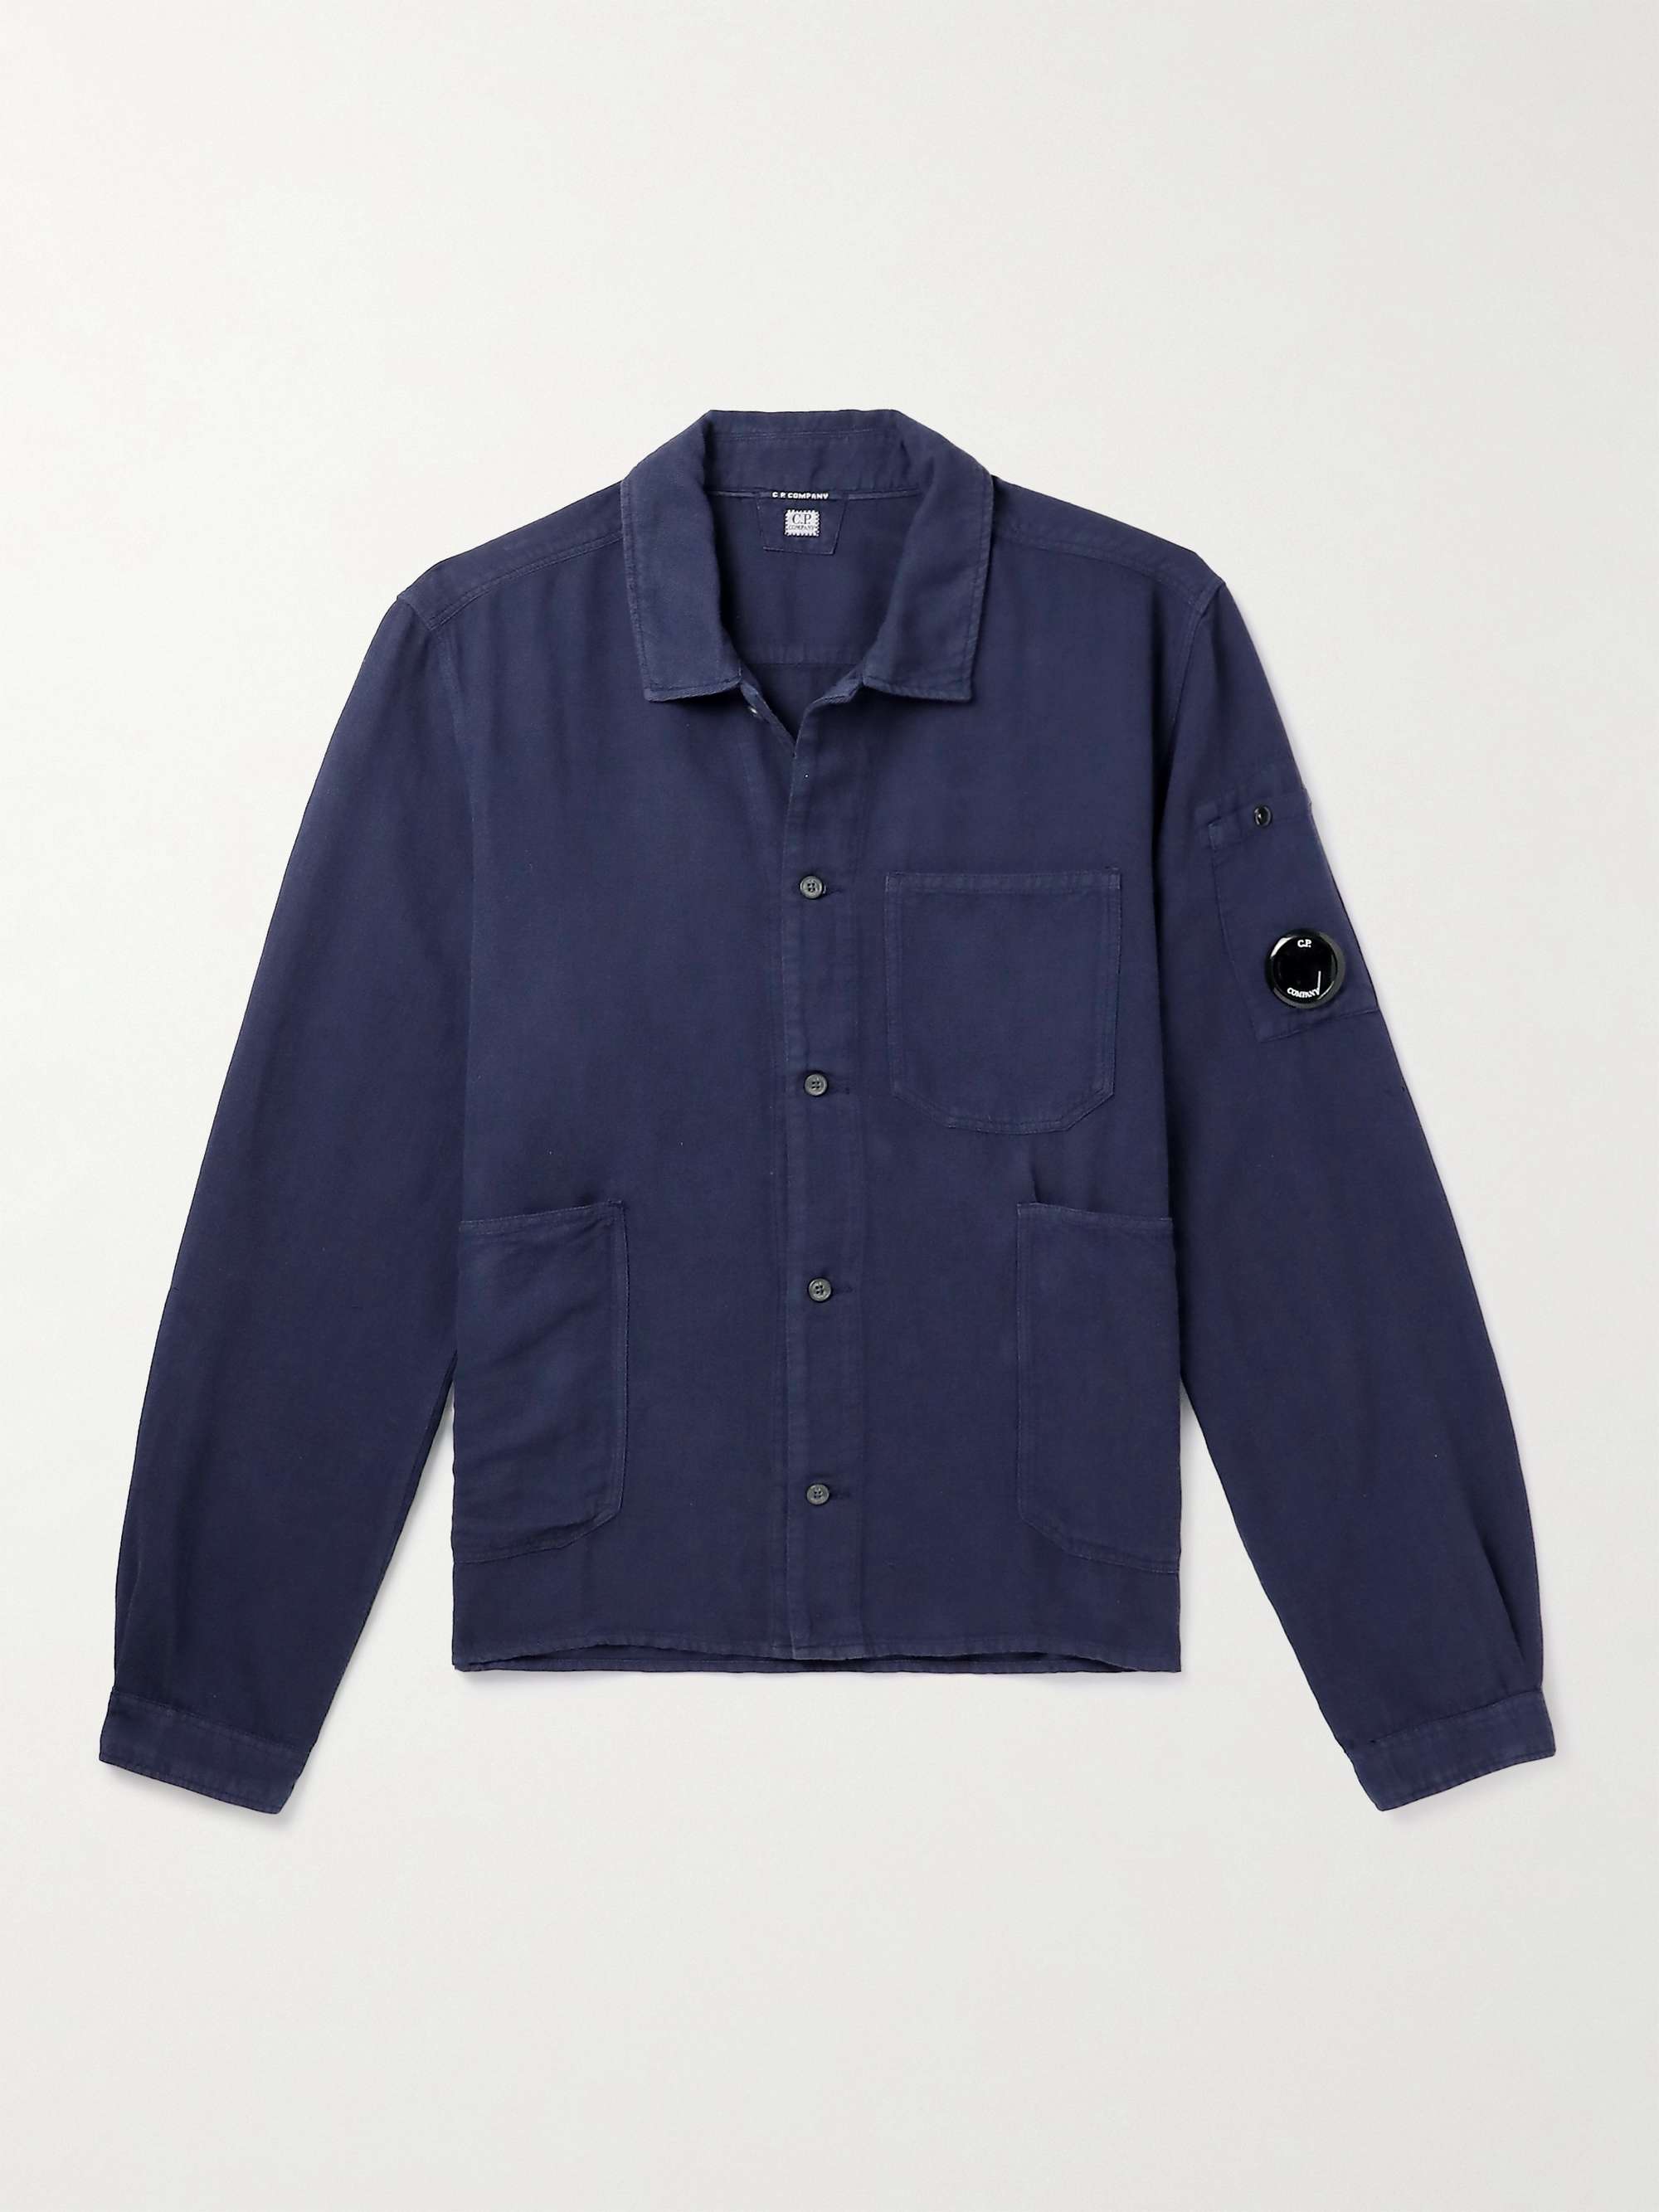 C.P. COMPANY Broken Cotton and Linen-Blend Shirt Jacket | MR PORTER